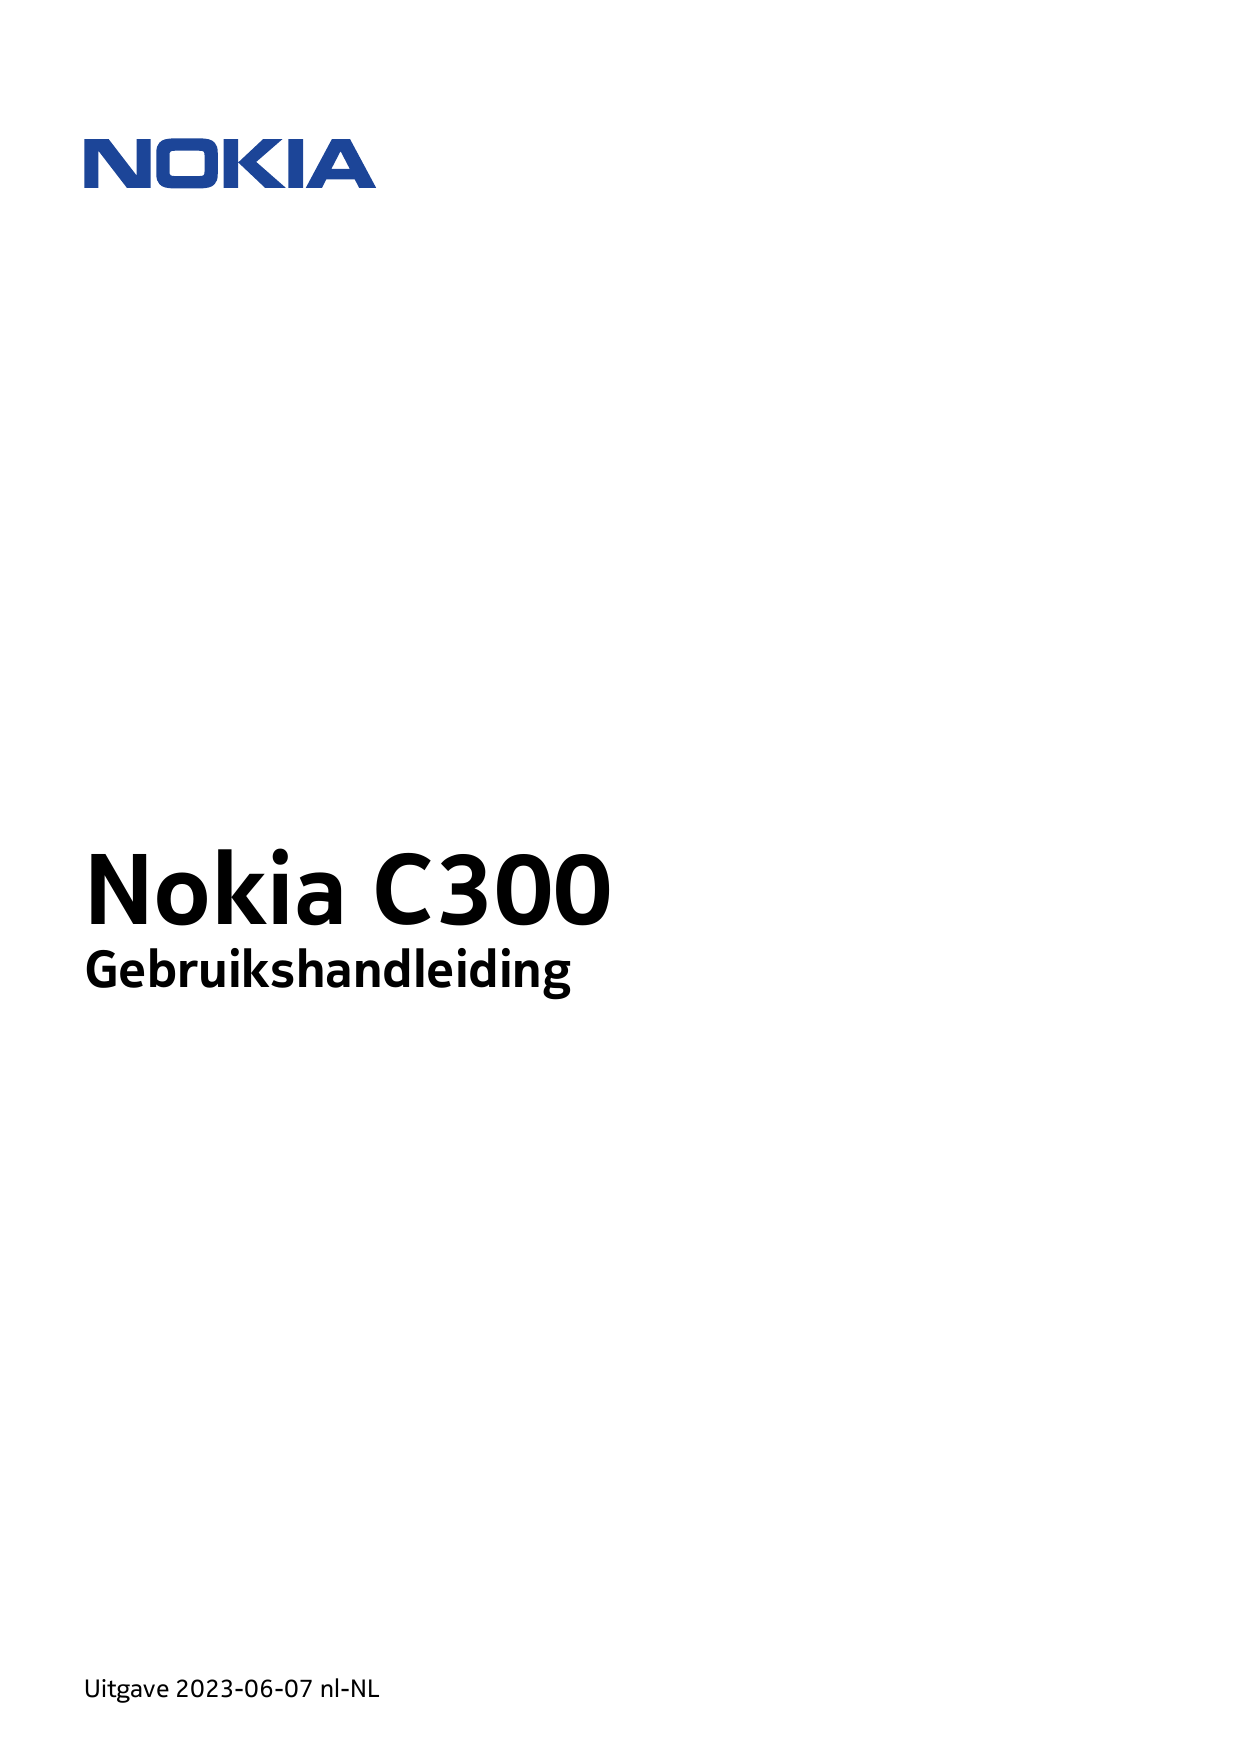 Nokia C300GebruikshandleidingUitgave 2023-06-07 nl-NL